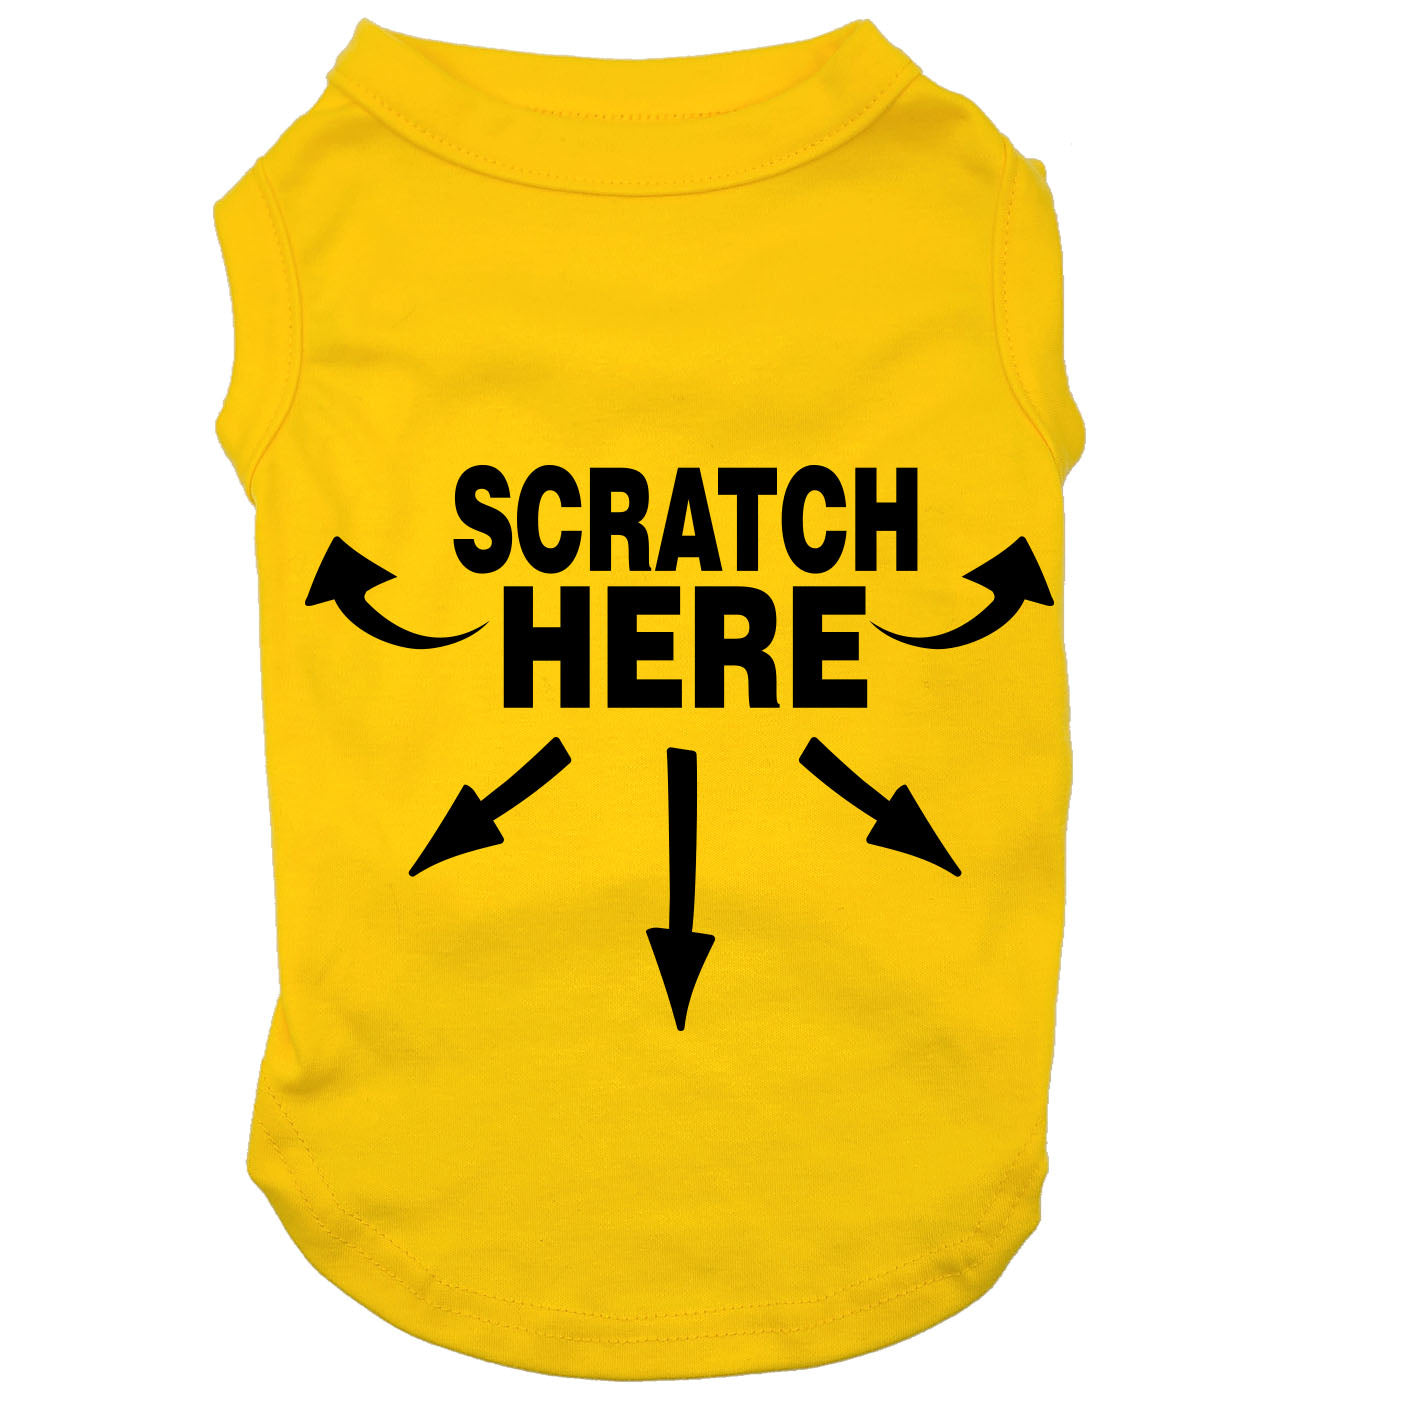 Scratch here, dog t-shirt